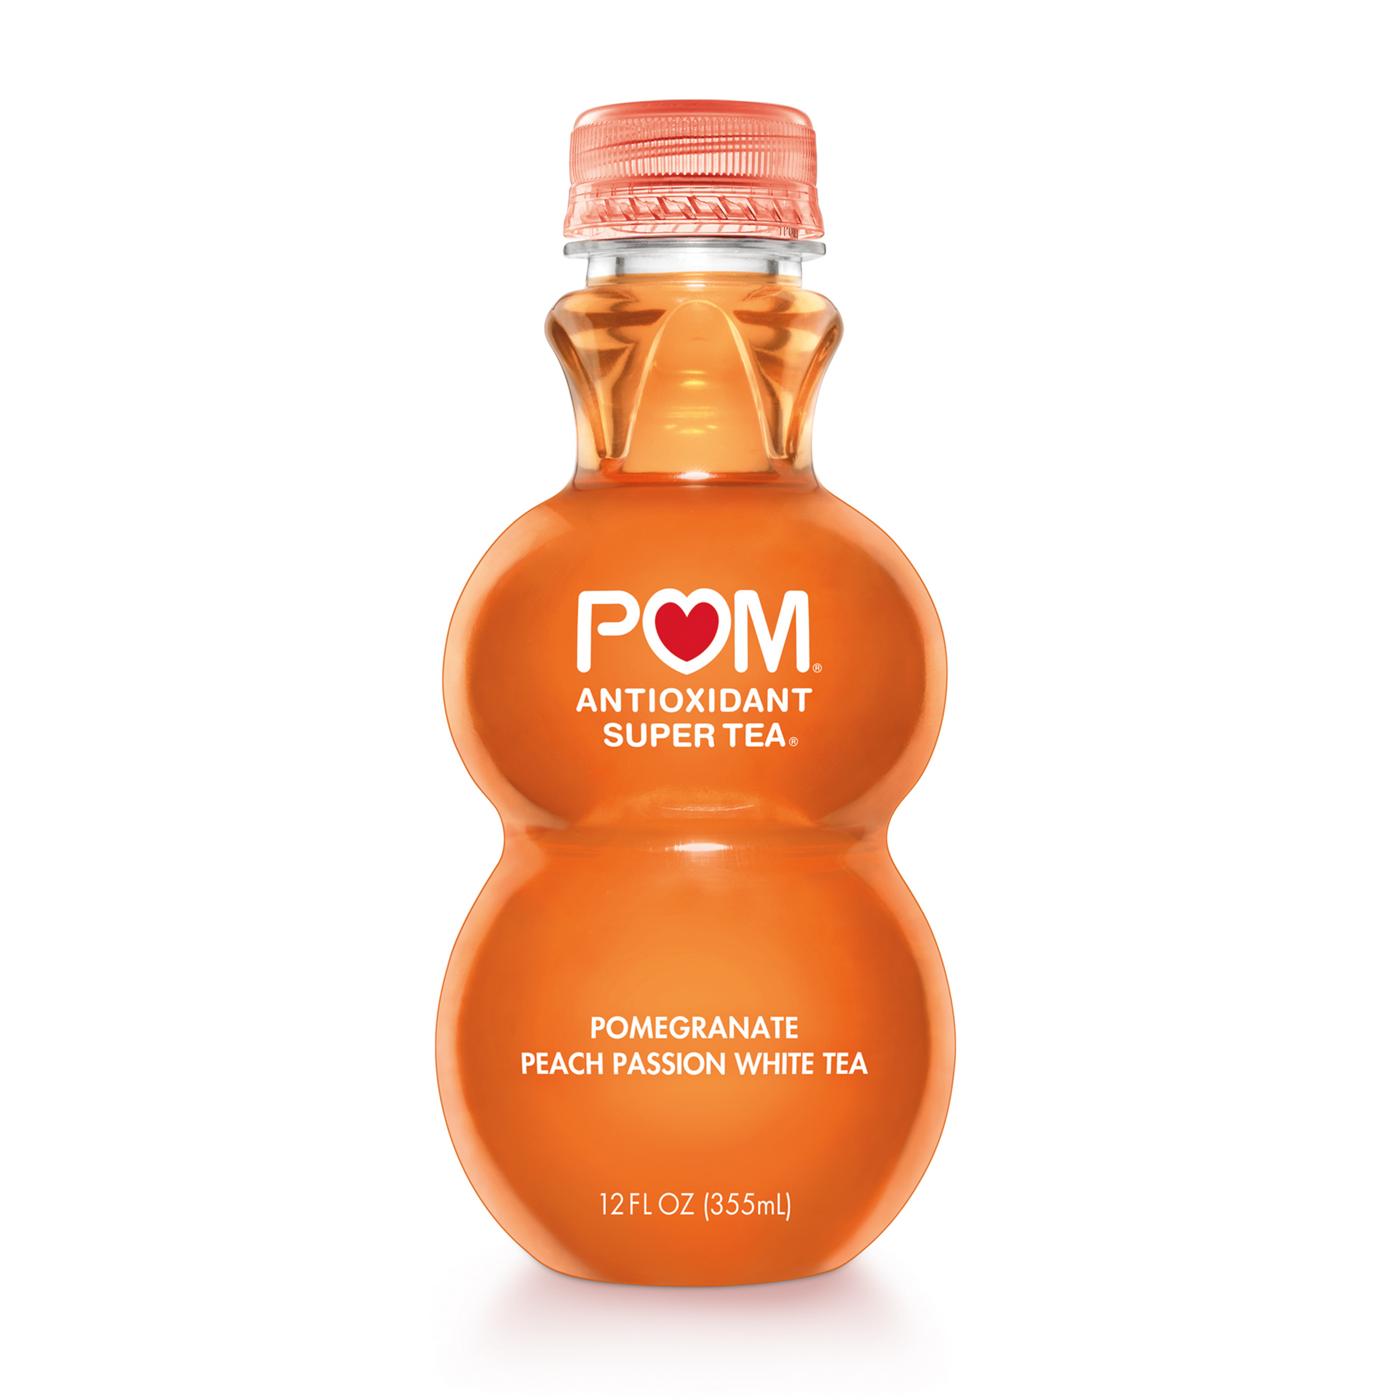 Pom Antioxidant Super Tea - Pomegranate Peach Passion White Tea; image 1 of 3